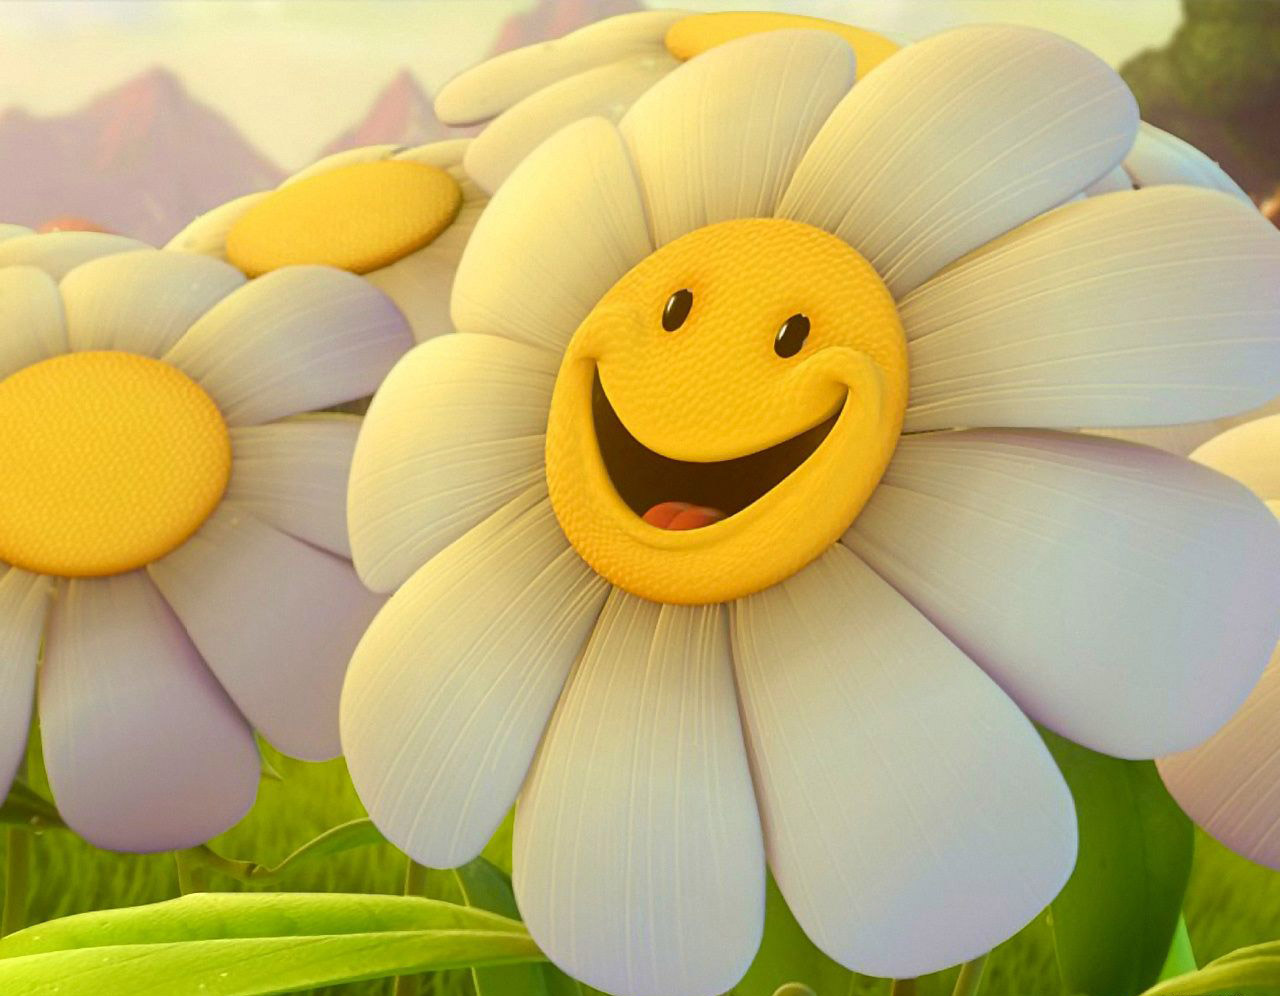 https://blogger.googleusercontent.com/img/b/R29vZ2xl/AVvXsEg5ww5EJW77bwWLRwDaP3skjV3sbSPCKIrR5MH04WiYuJpcKa6LjTuiPiX4813fFdisacZSoaFRSL9ZgrOjnFDrLQOMHGa8Z9wgFvMzKhEdPHNUOEqgL_GIemnR3NjTmEW1Hw6oBZPZXvwh/s1600/Smiley_Flower_Happy%2521_wallpaper.jpg